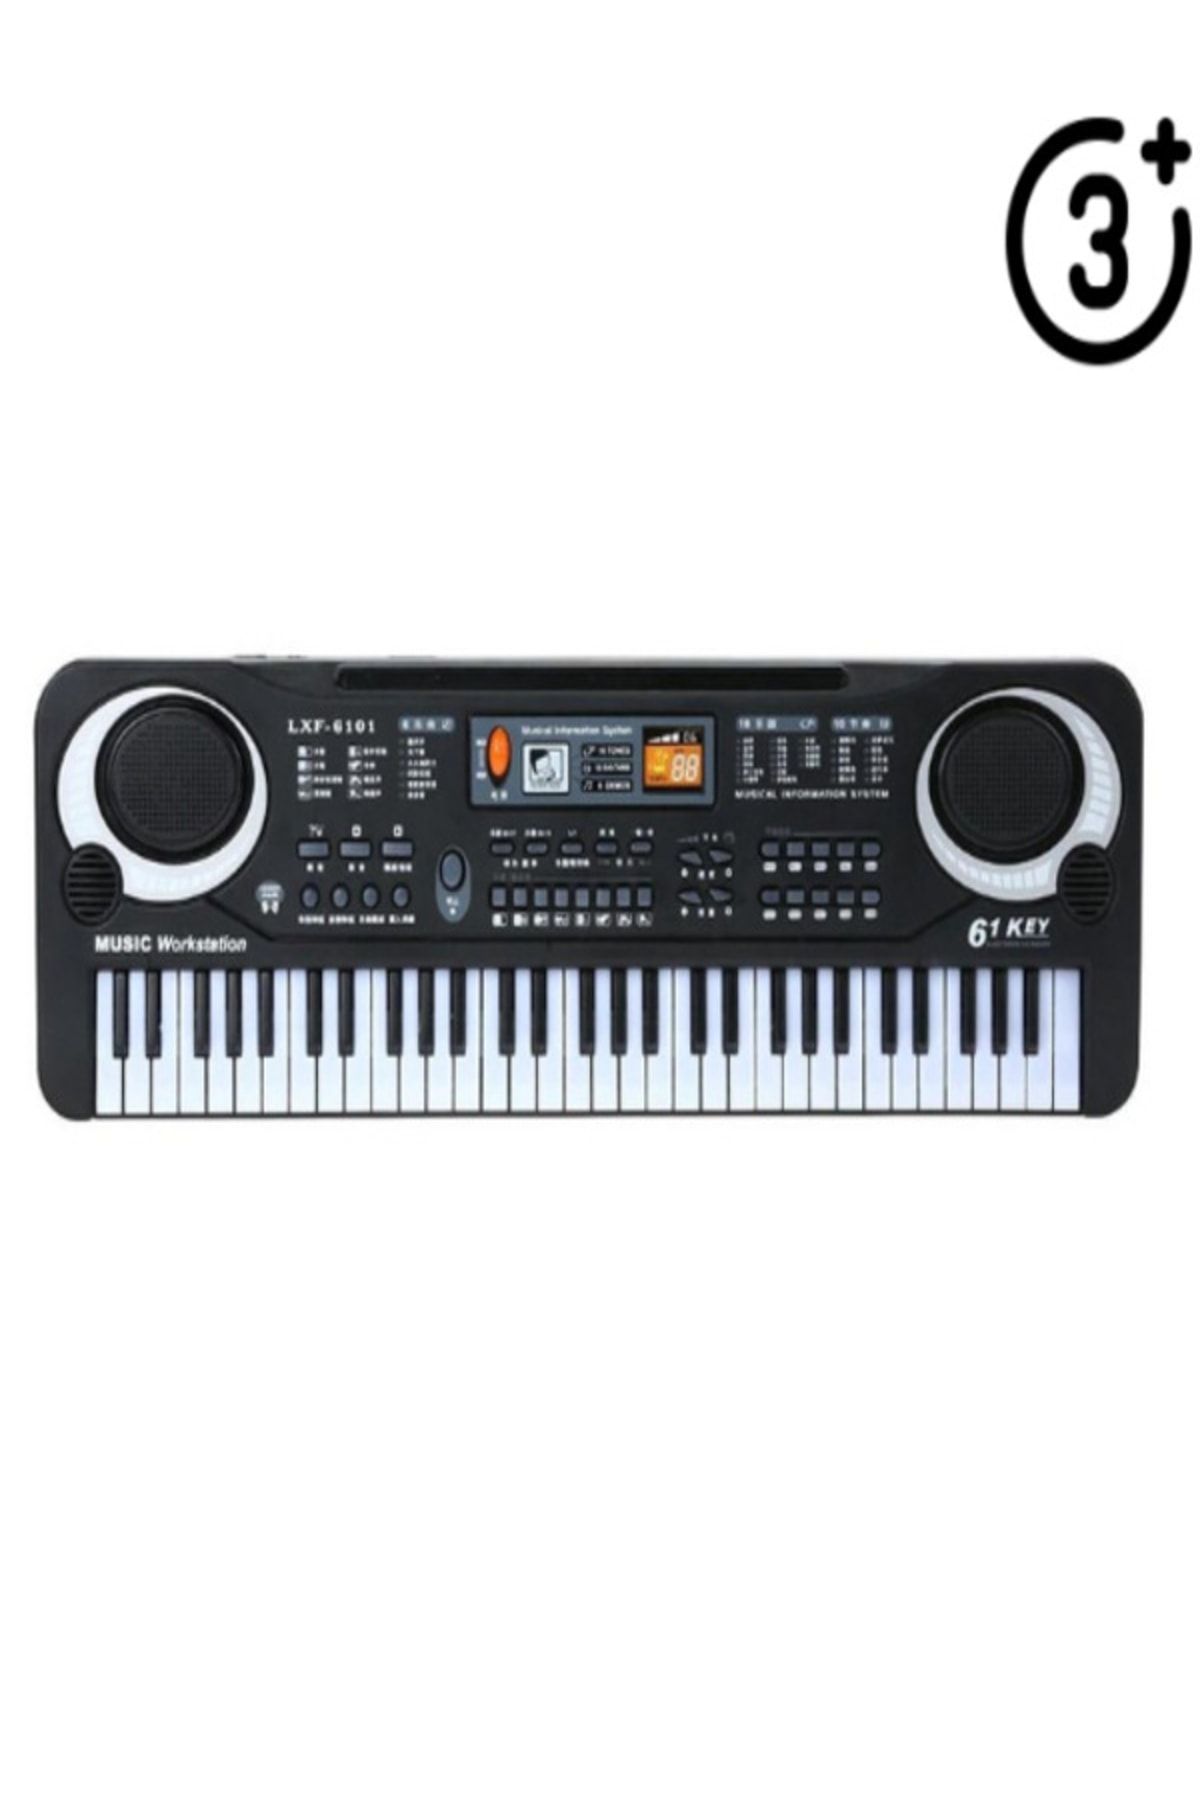 DailyTech 61 Tuşlu Org Electronic Keyboard Klavye Pilli Mikrofonlu Karaoke